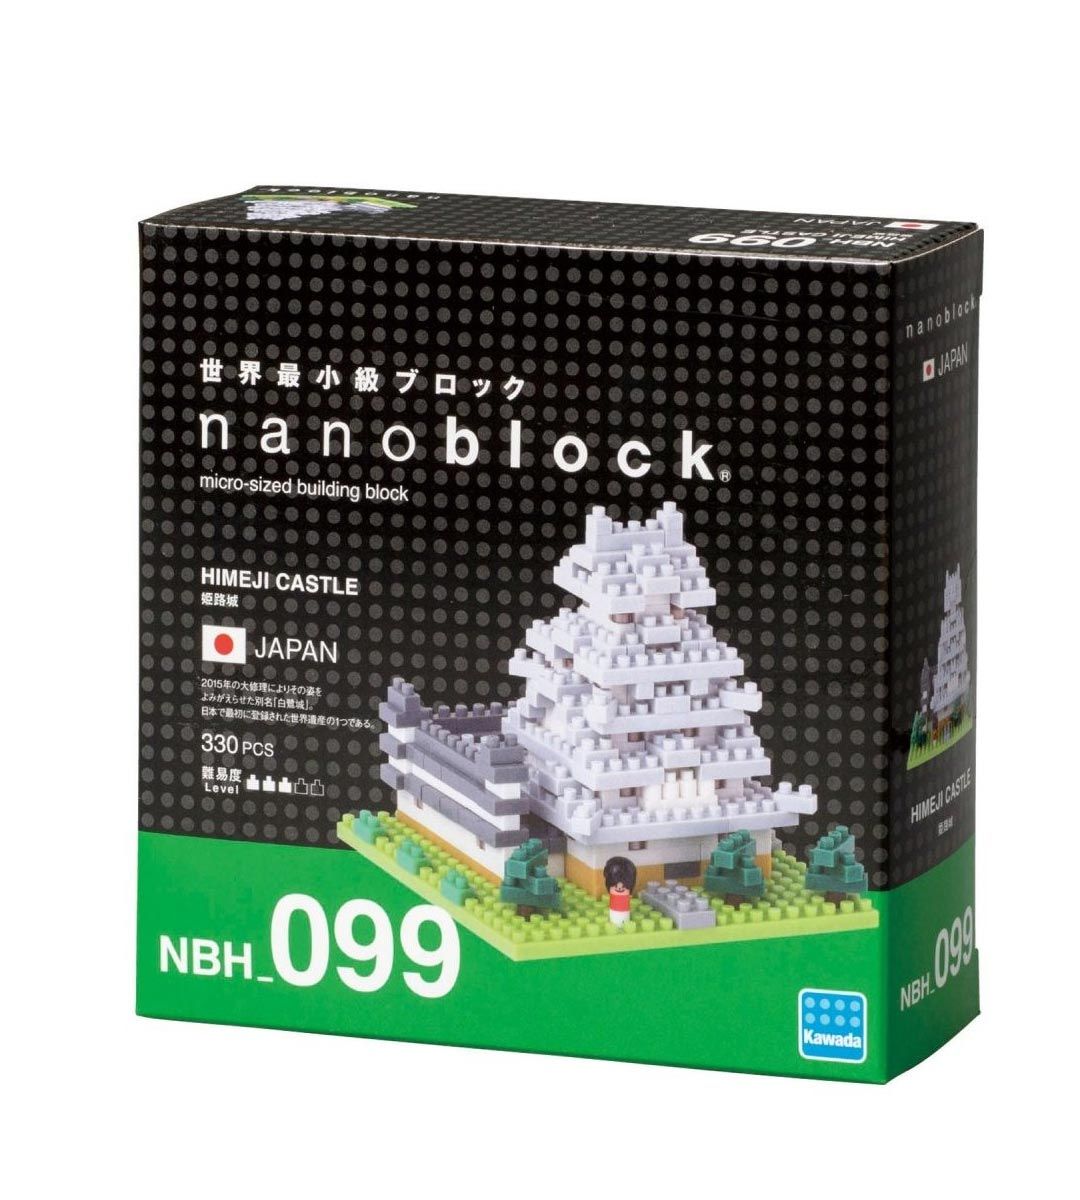 Nanoblock - Château de Himeji - NBH 099